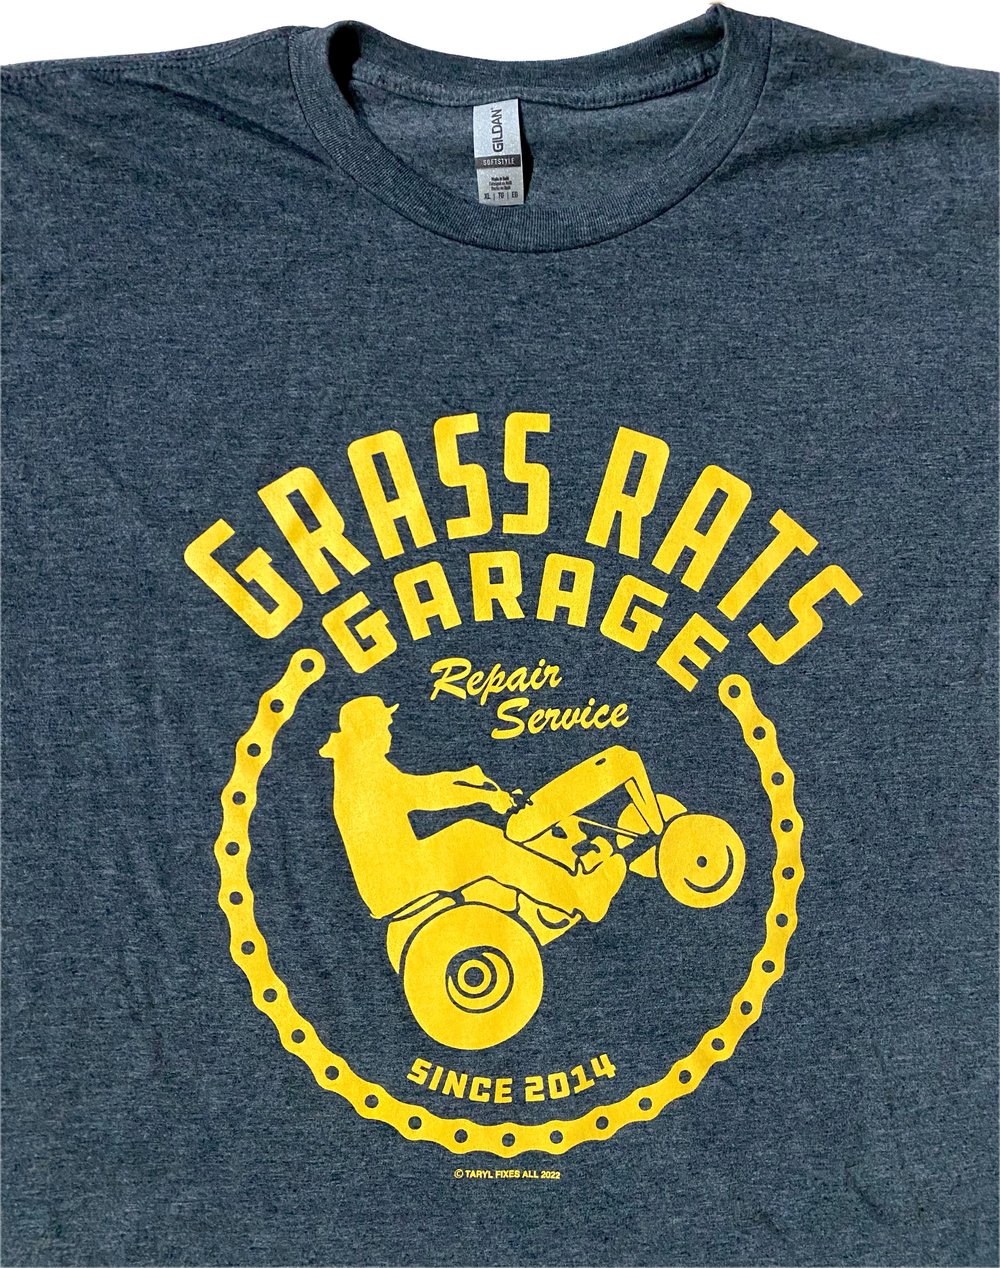 BACK IN STOCK! Grass Rats Garage 'Wheelie' Tees